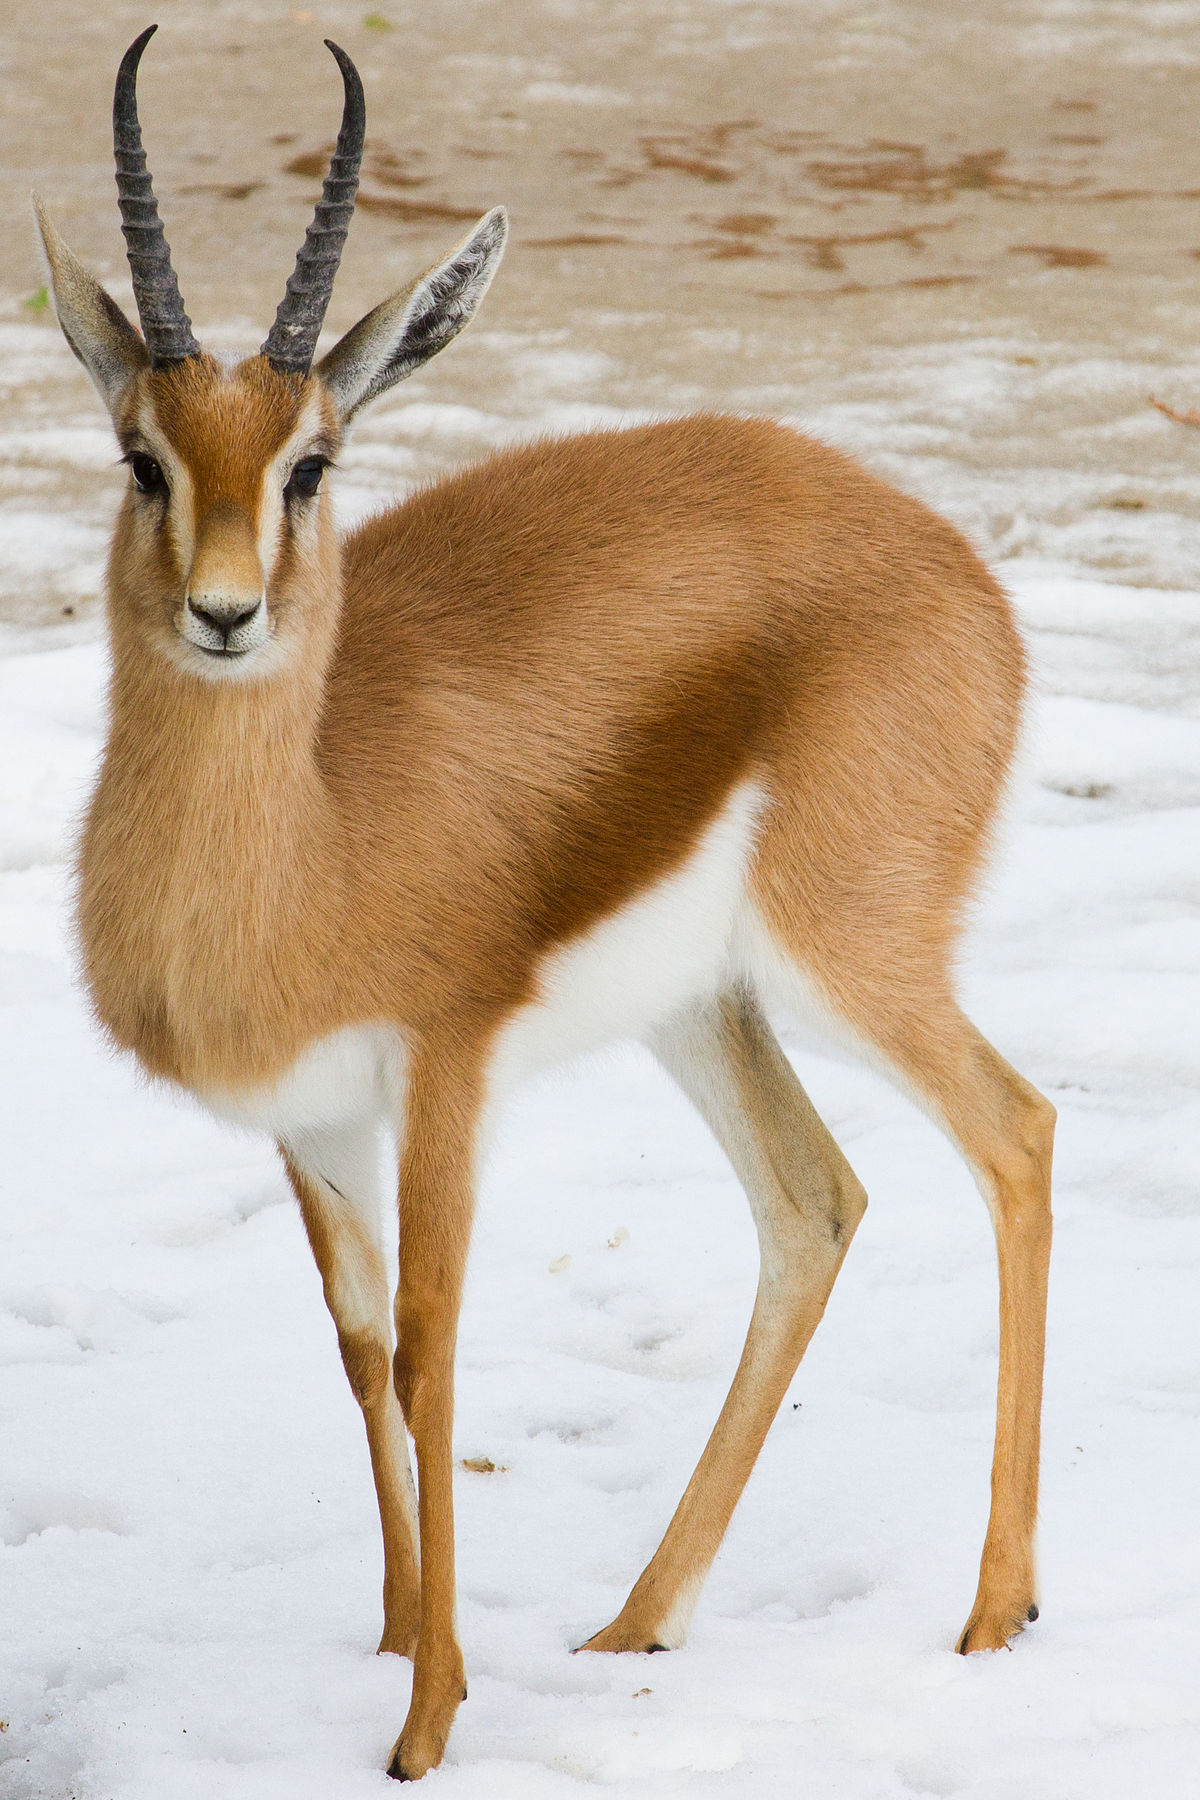 Dorcas gazelle - Wikipedia